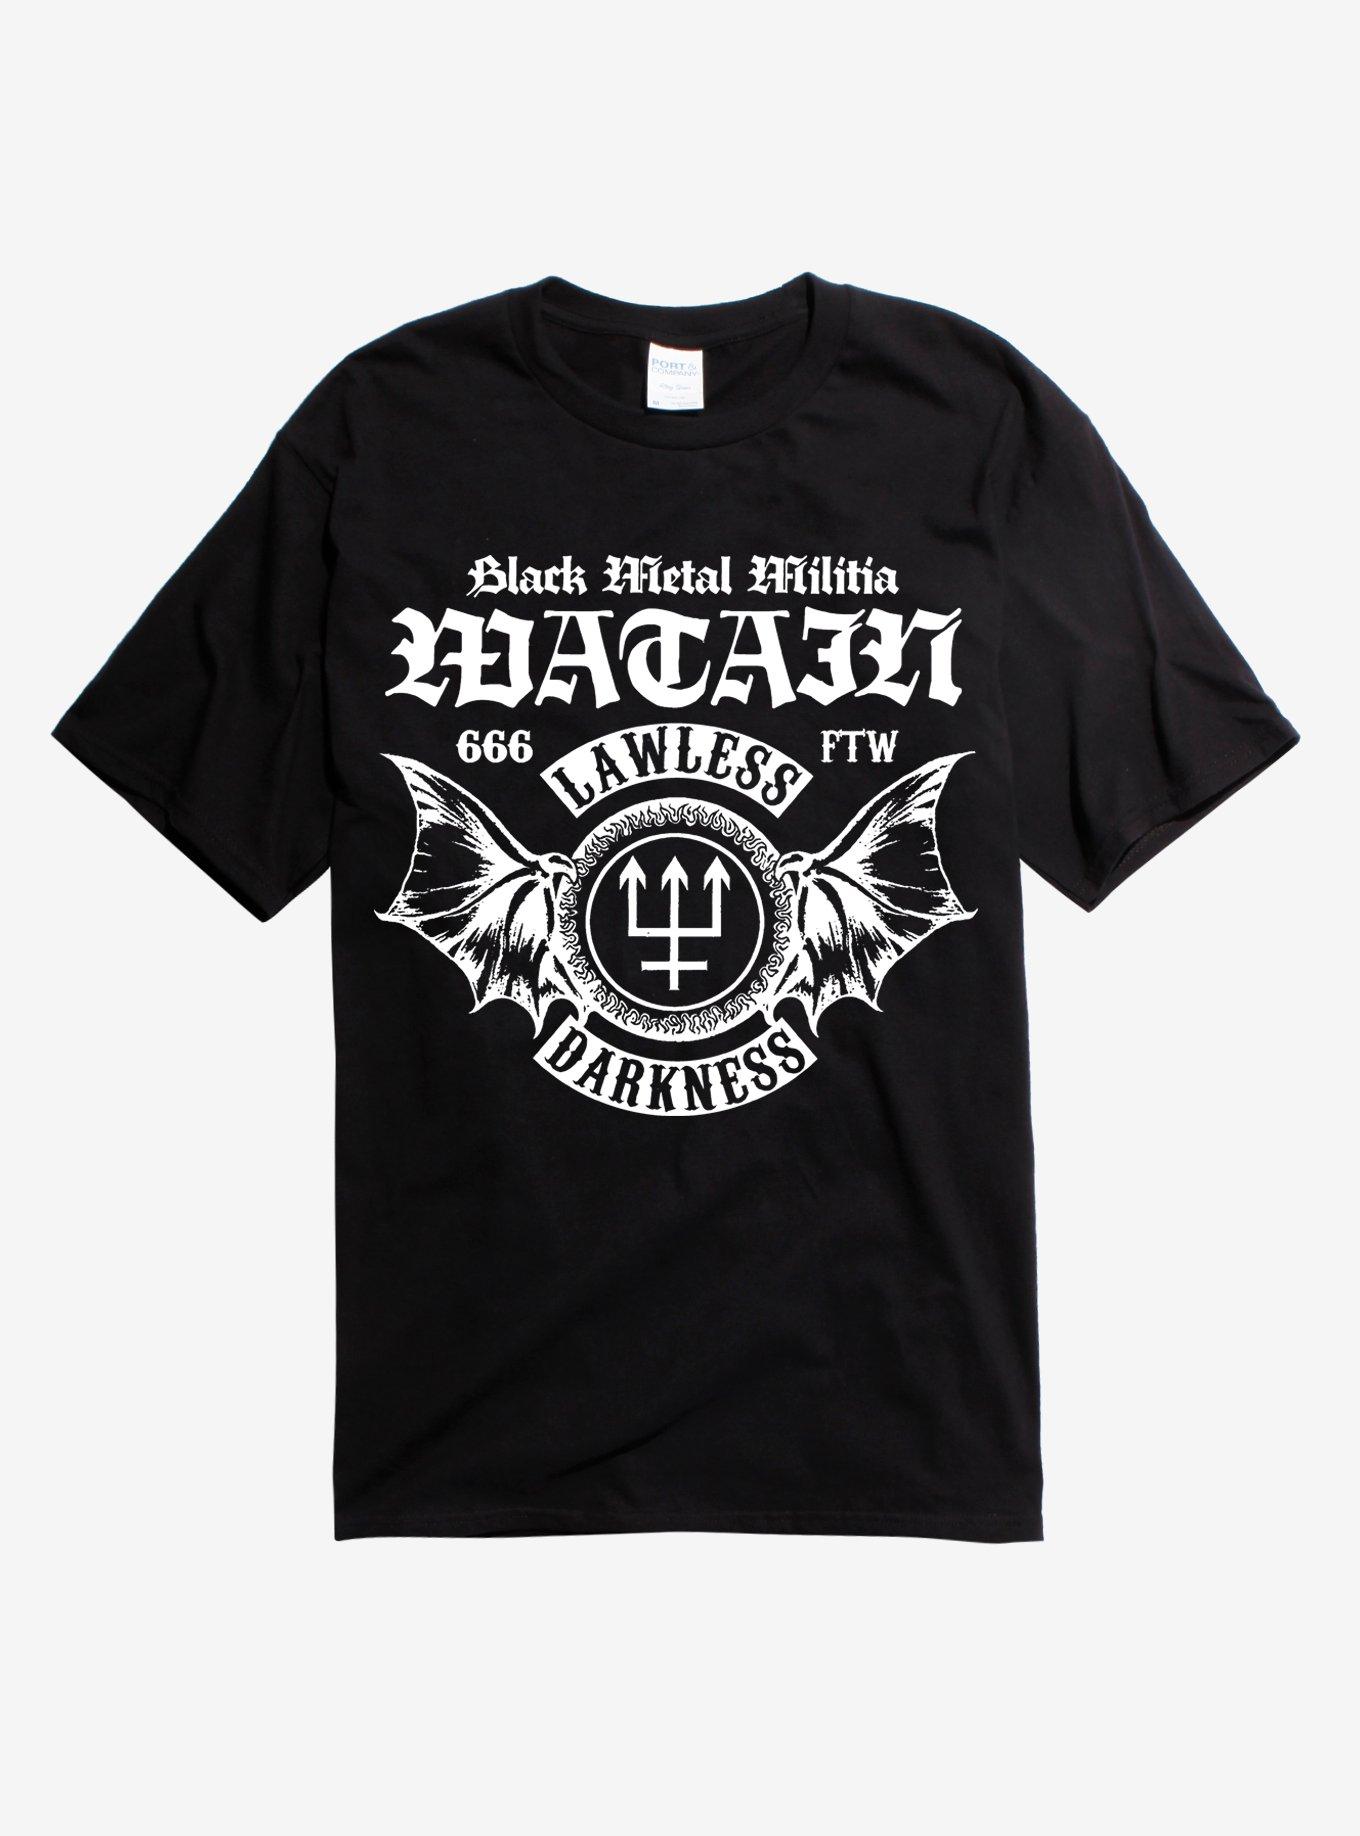 Watain Lawless Darkness T-Shirt, BLACK, hi-res